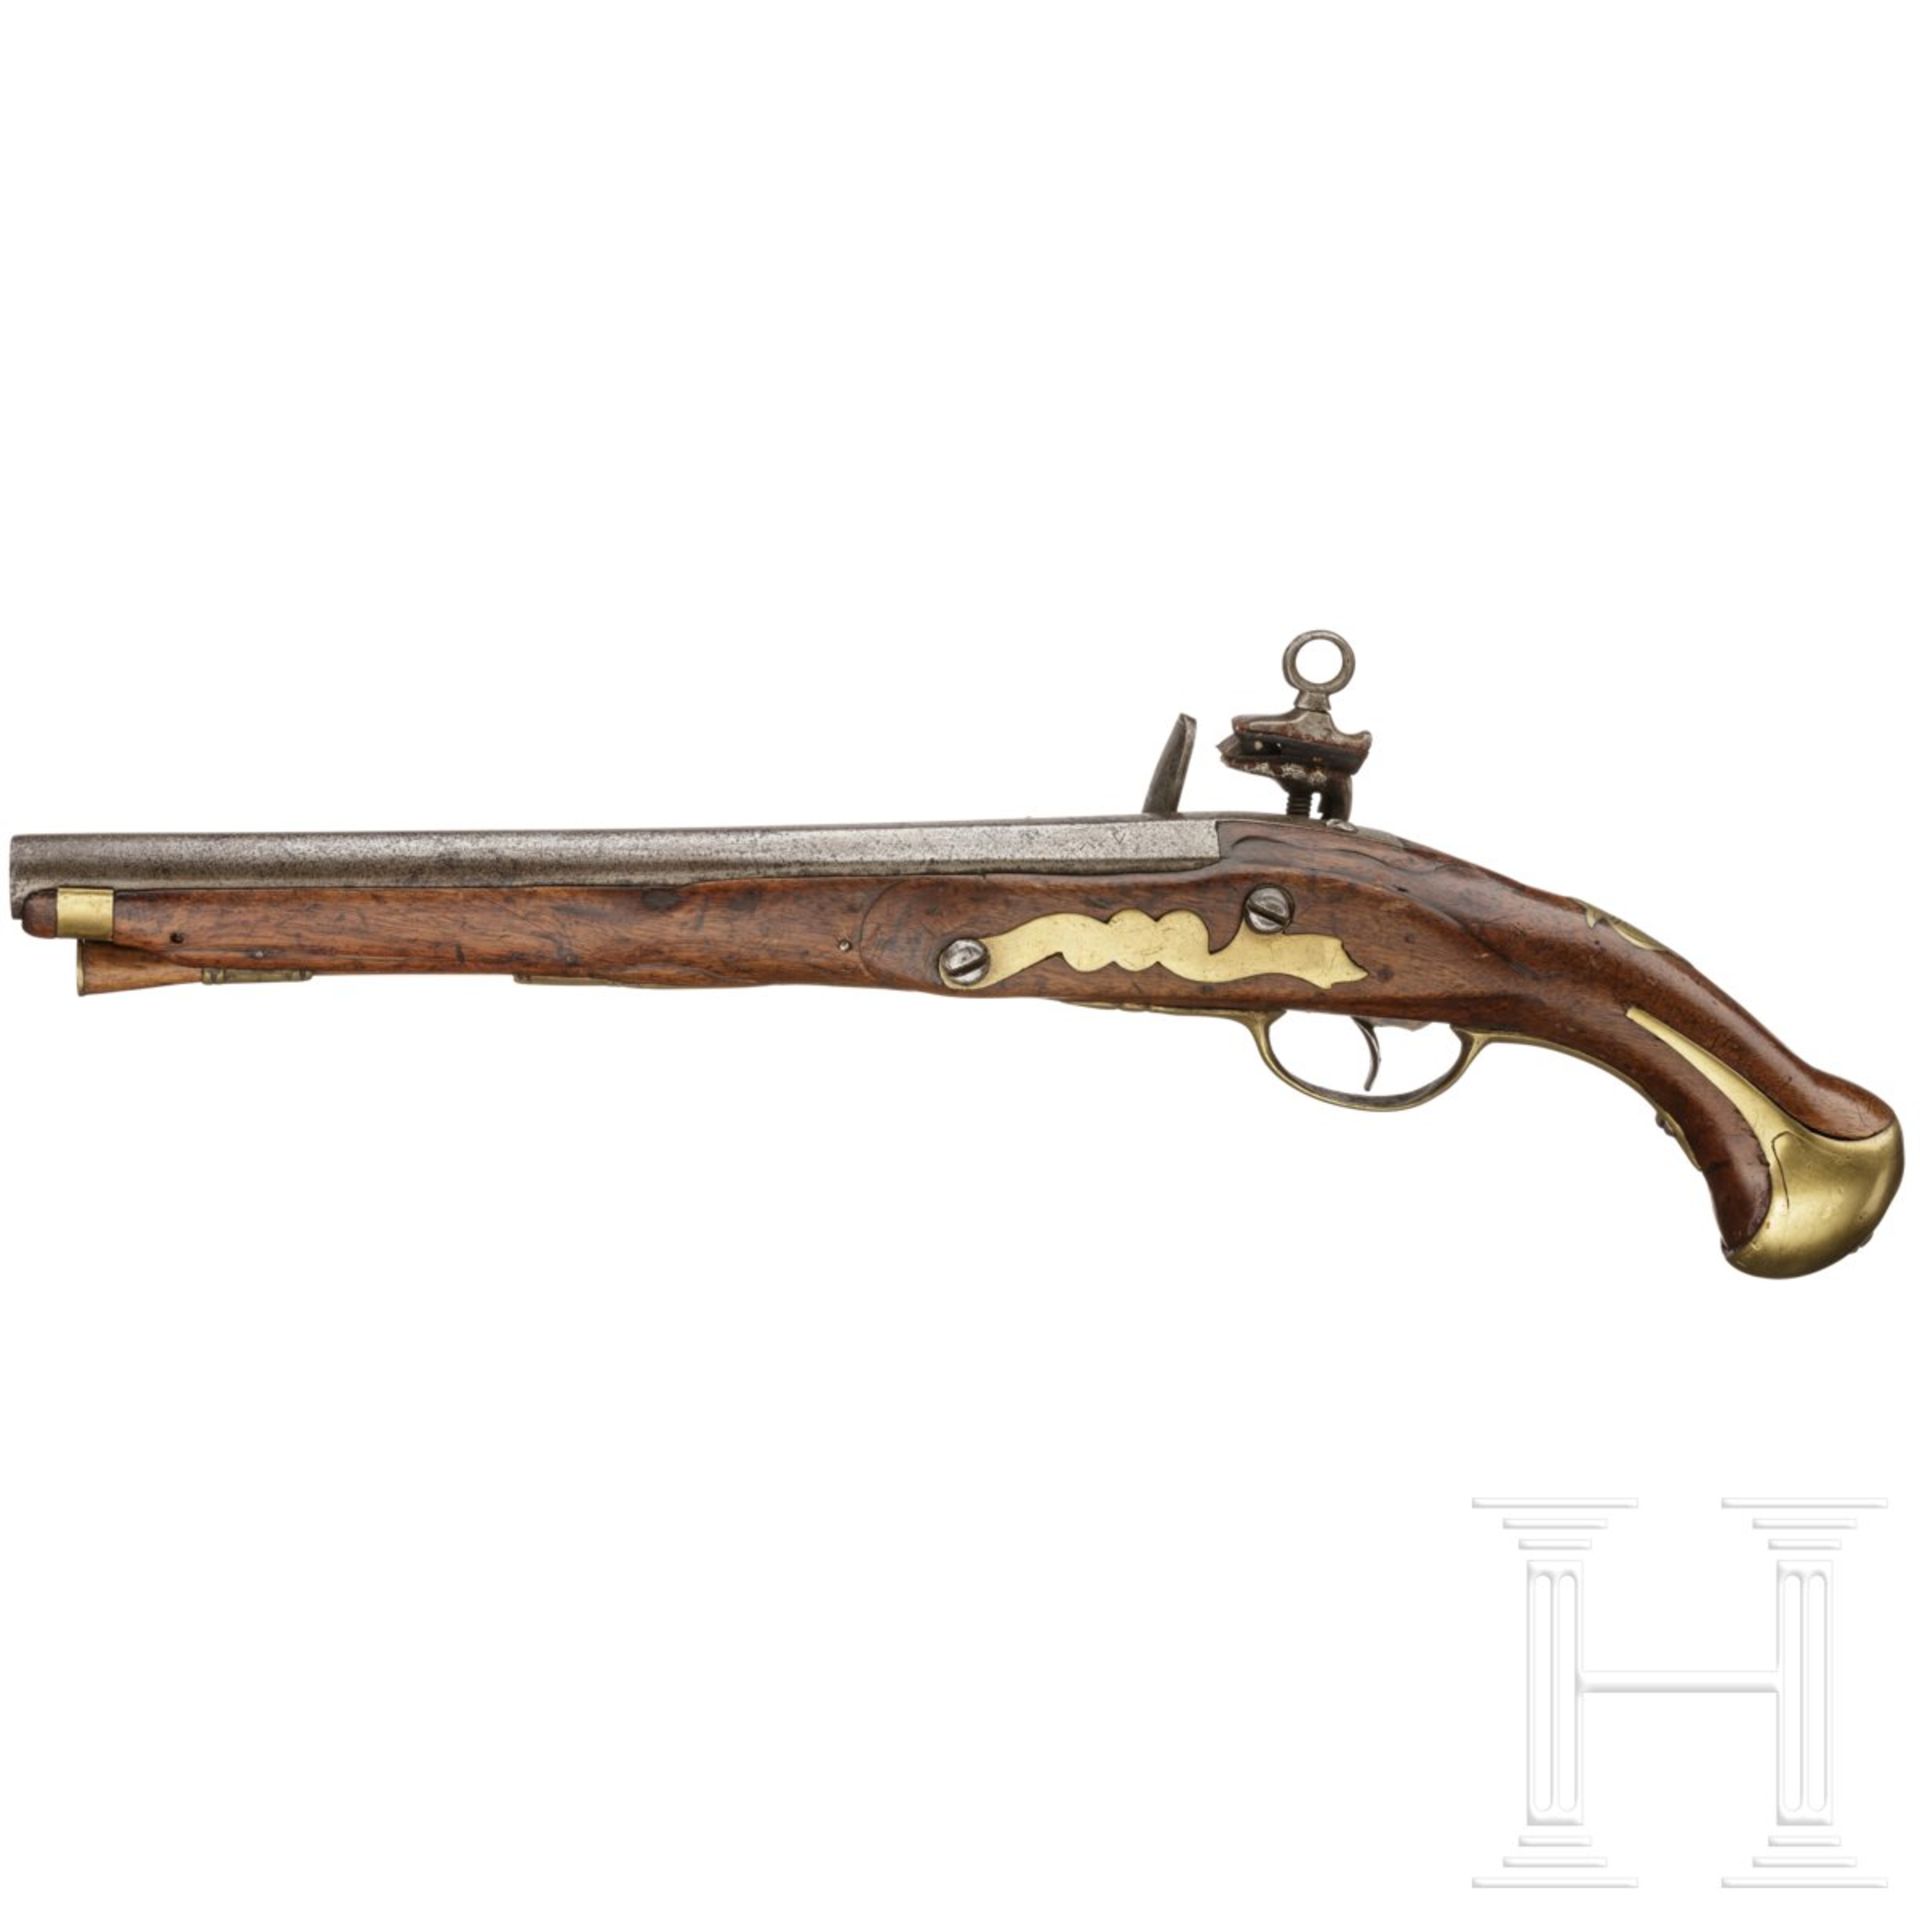 Kavallerie-Steinschlosspistole Mod. 1753, Fertigung 1781 - Bild 2 aus 2